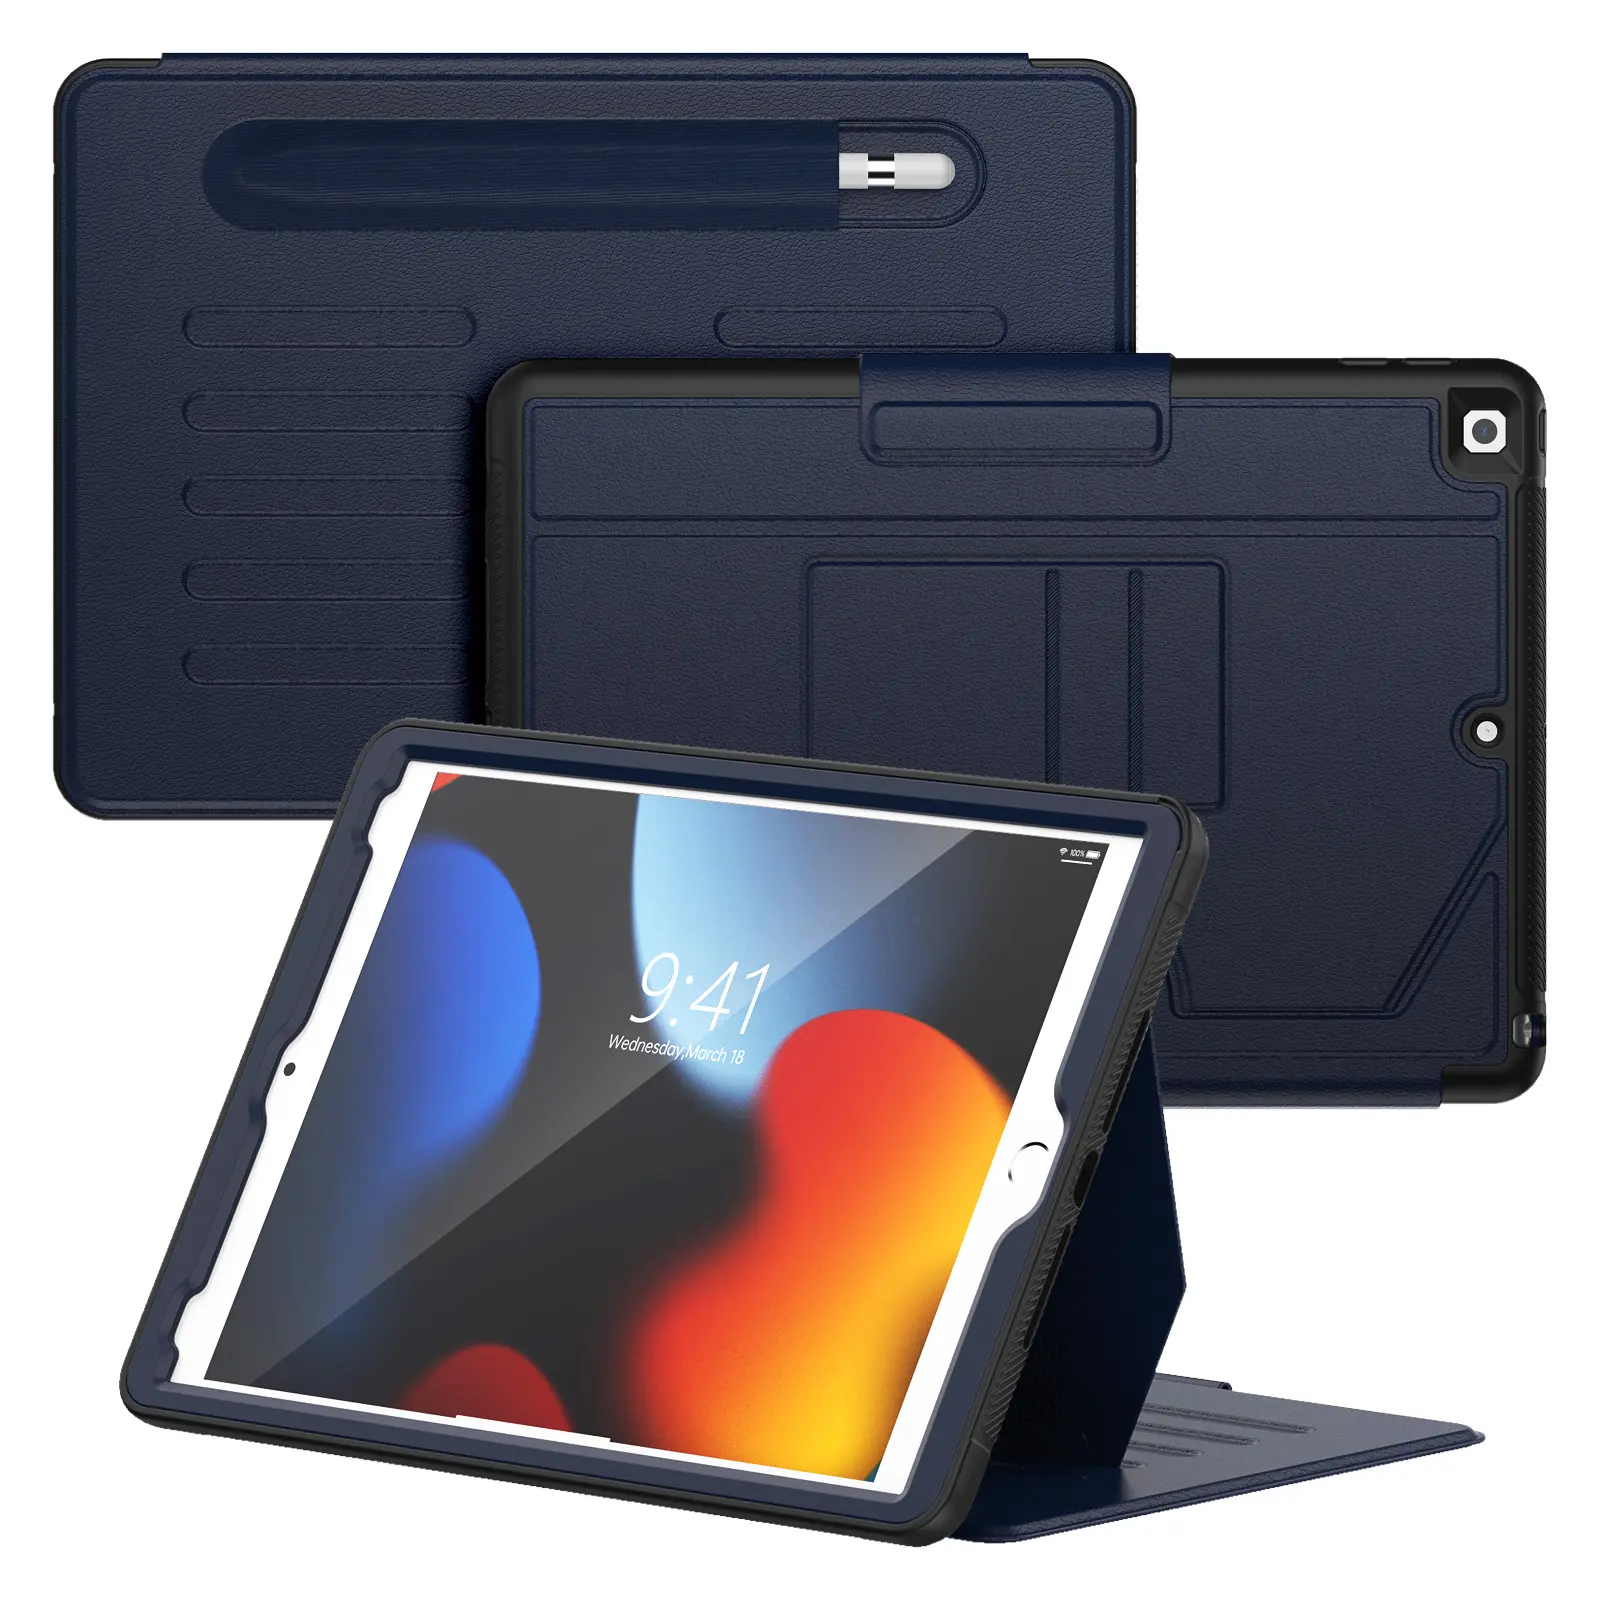 Casing Tablet kulit PU Folio multi-sudut untuk iPad 9 8 Gen ke-7 10.2 inci Slot pena kartu casing buku pintar penutup pelindung berdiri